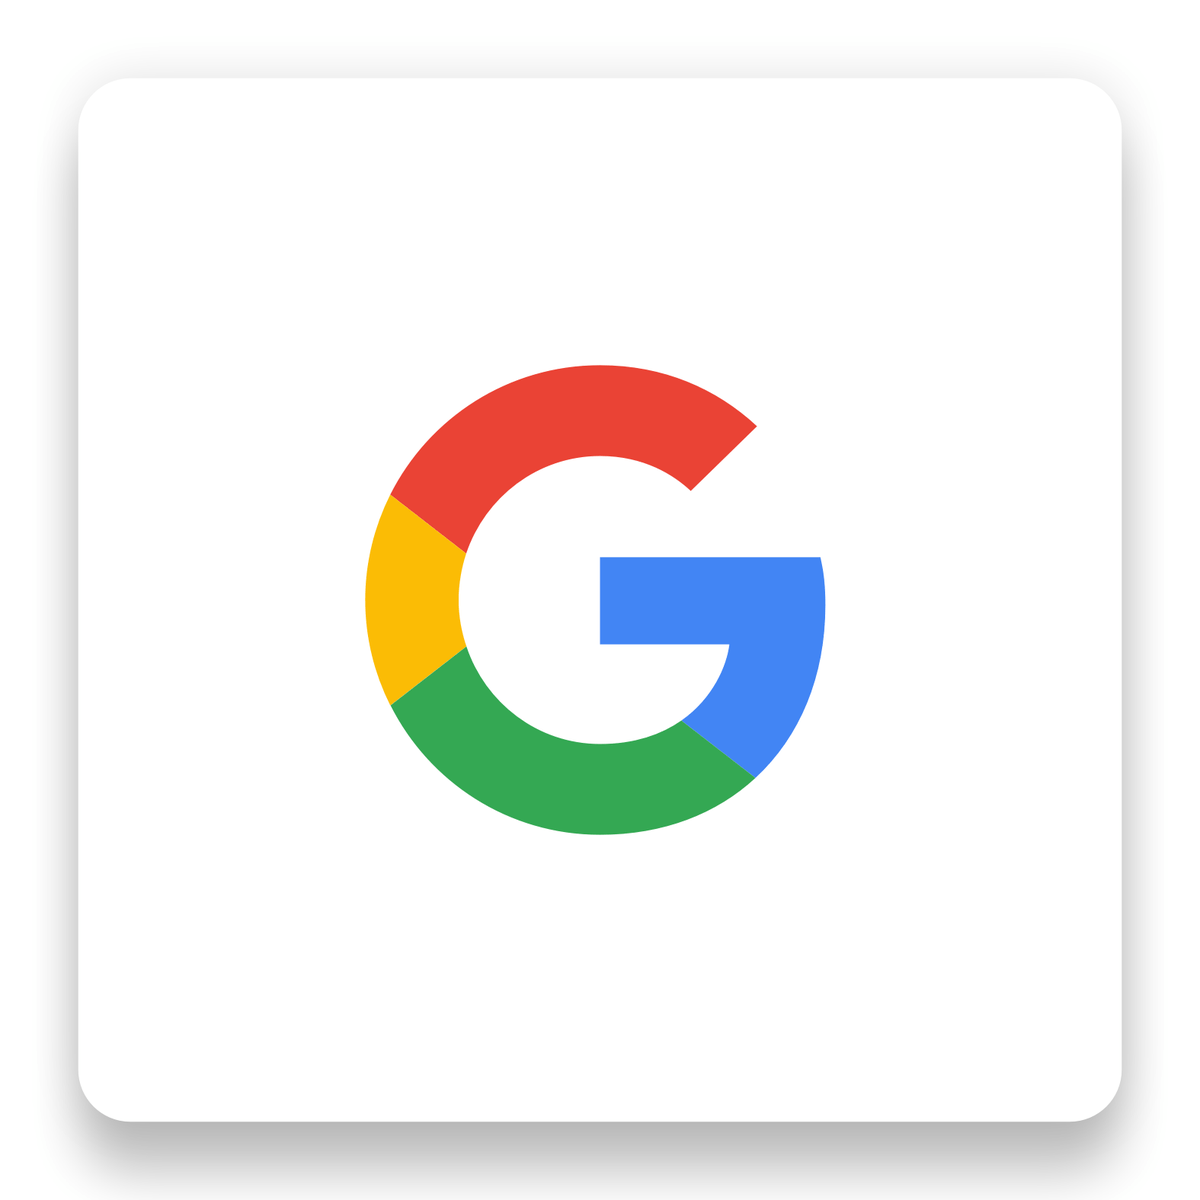 Cool Google Plus Logo - Miraz Mac - The new logo is